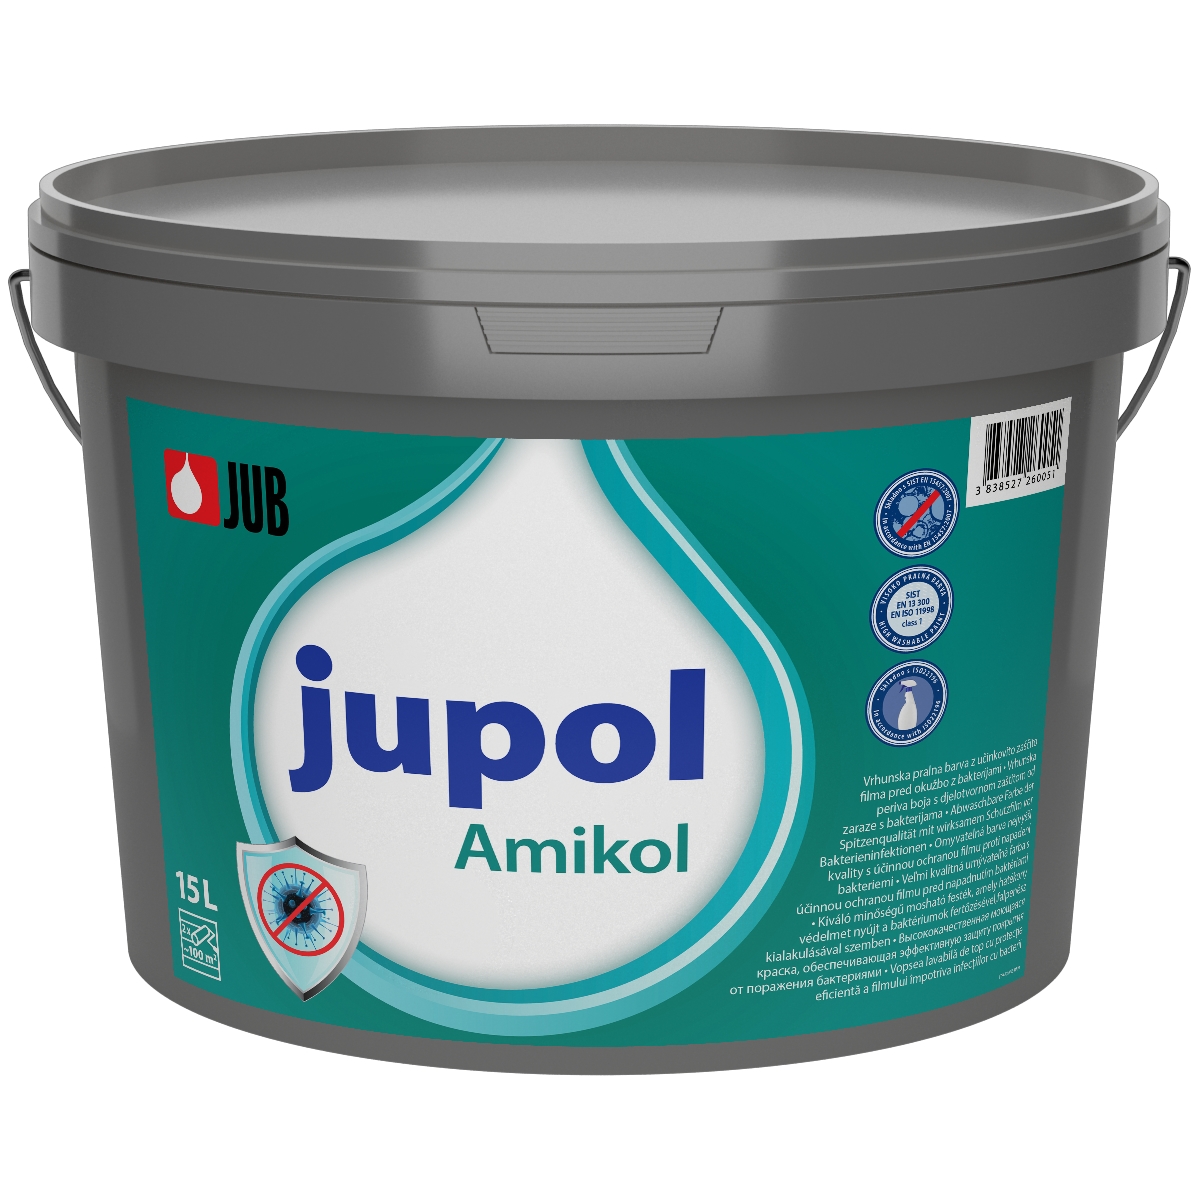 Vopsea lavabila JUPOL Amikol cu protectie impotriva bacteriilor - galeata 15 litri